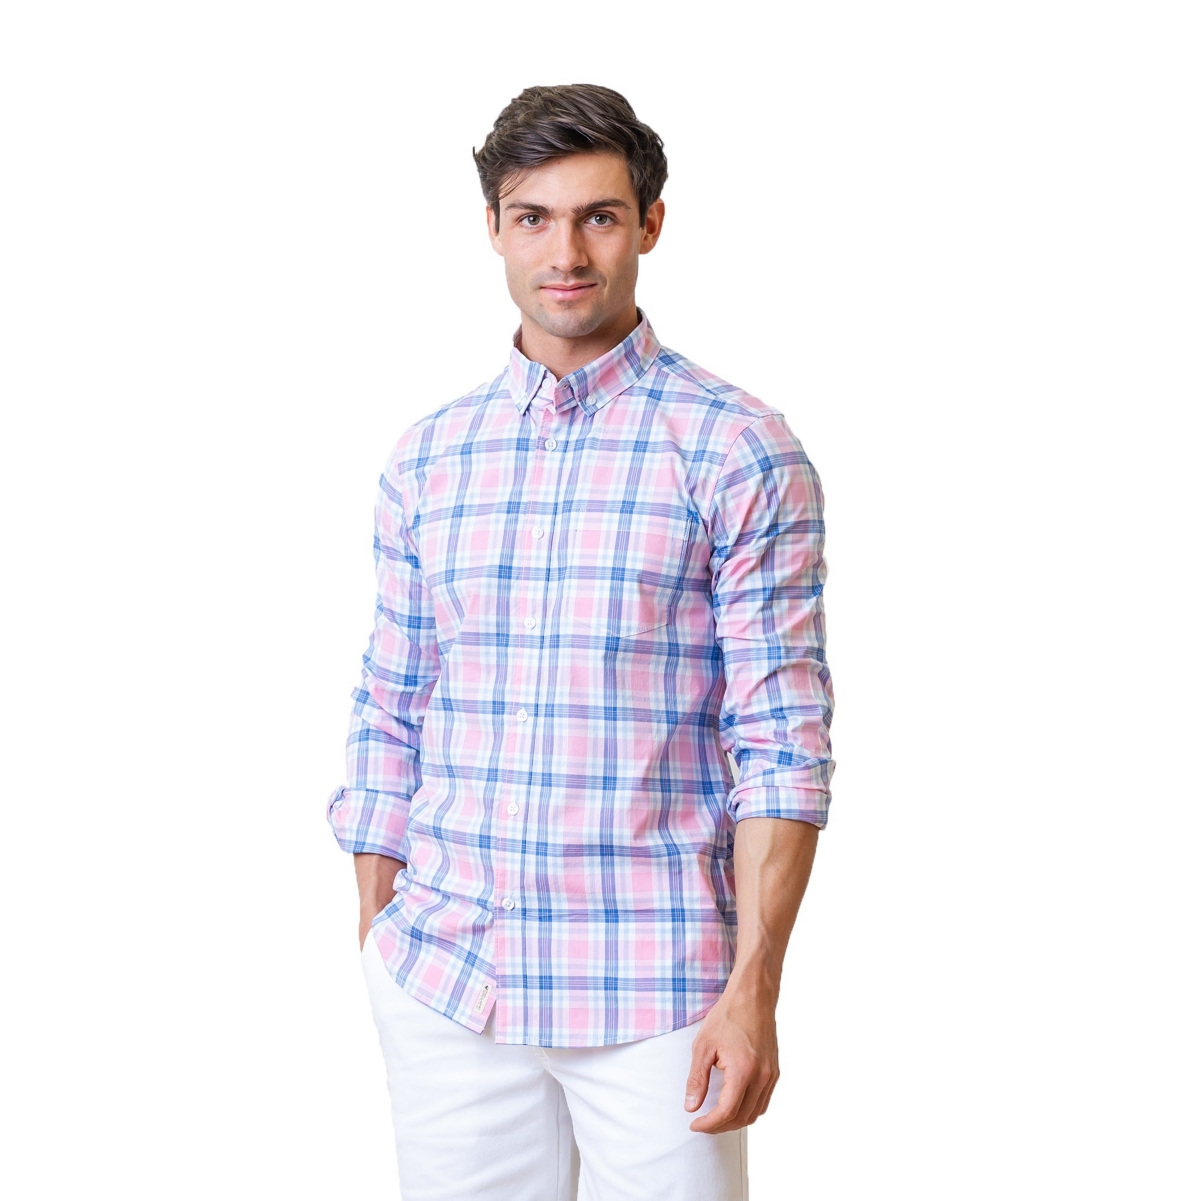 Mens' Poplin Button Down Shirt - Fresh Pink And Blue Plaid